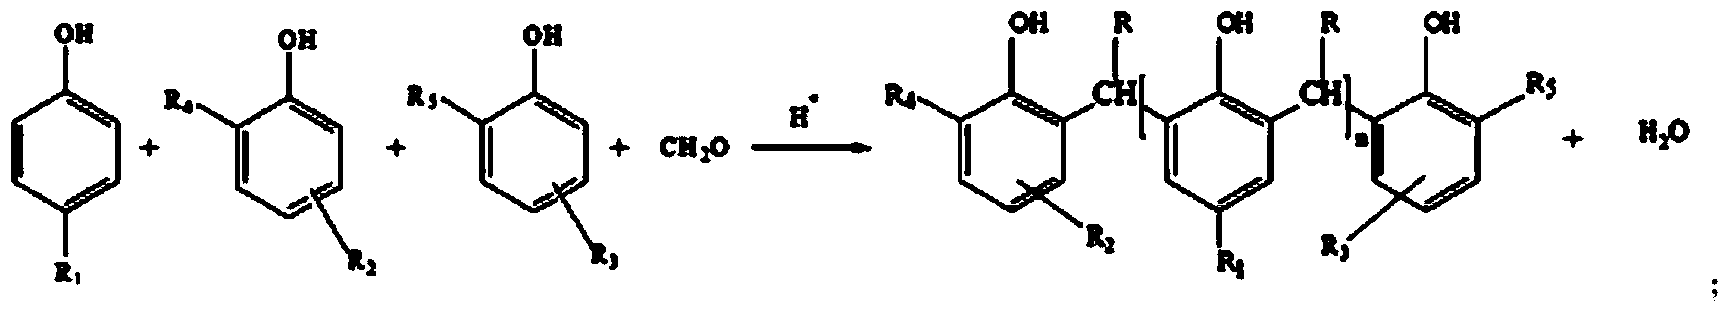 Synthesis method of alkyl phenol aldehyde resin